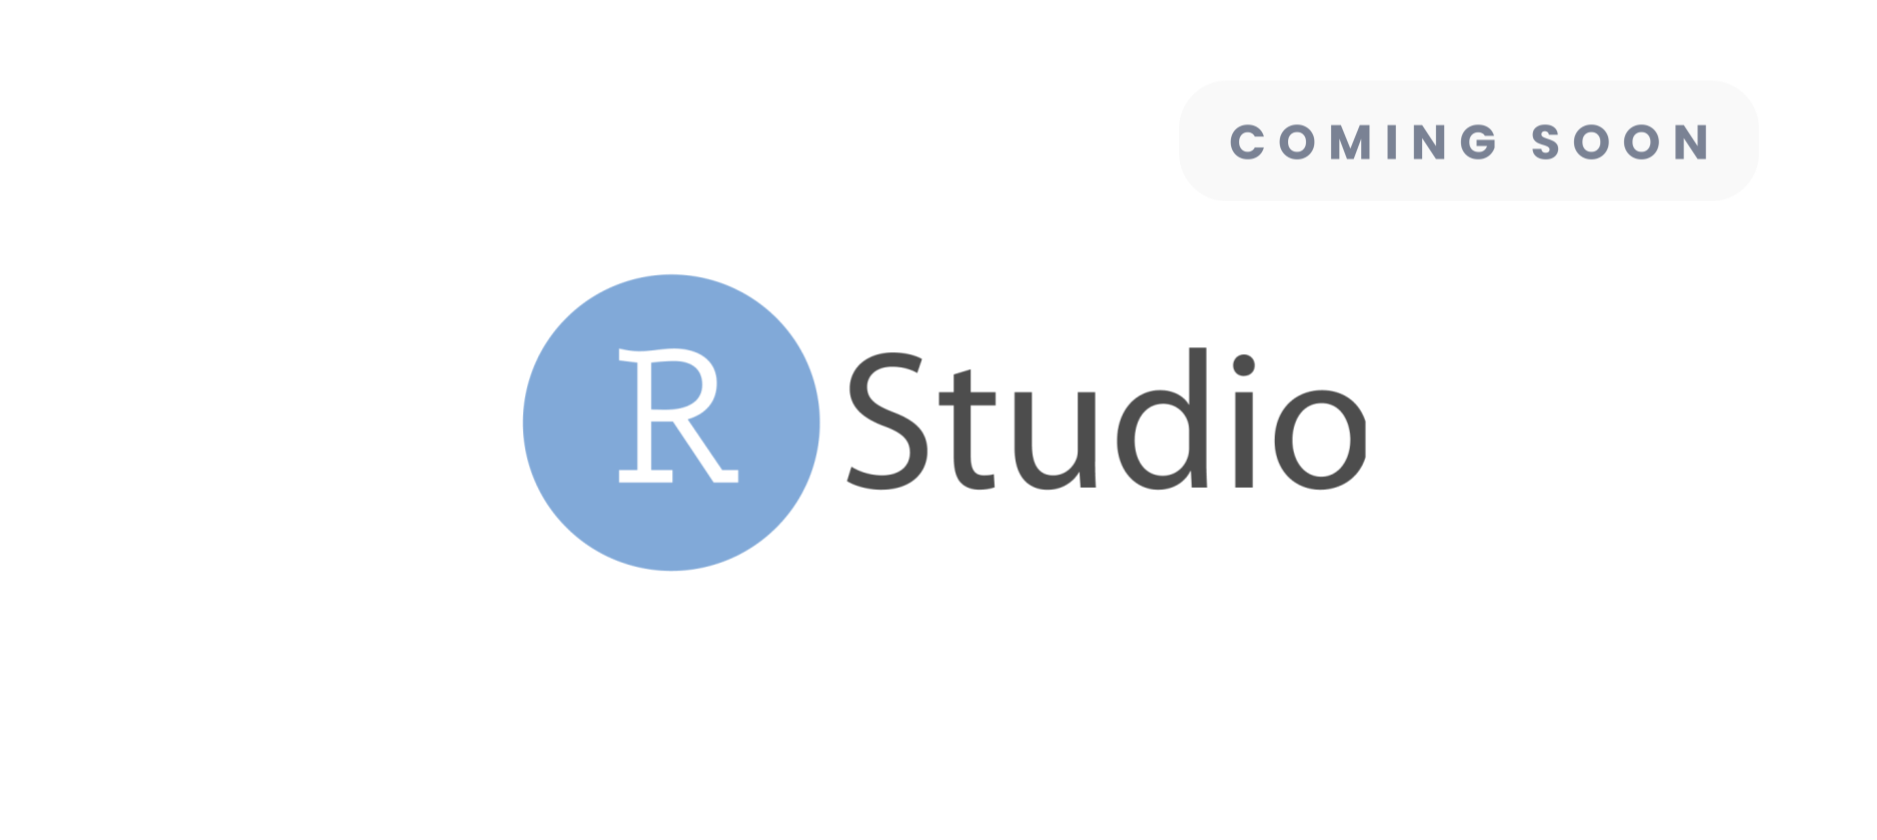 Machine Learning - R Studio - Coming soon